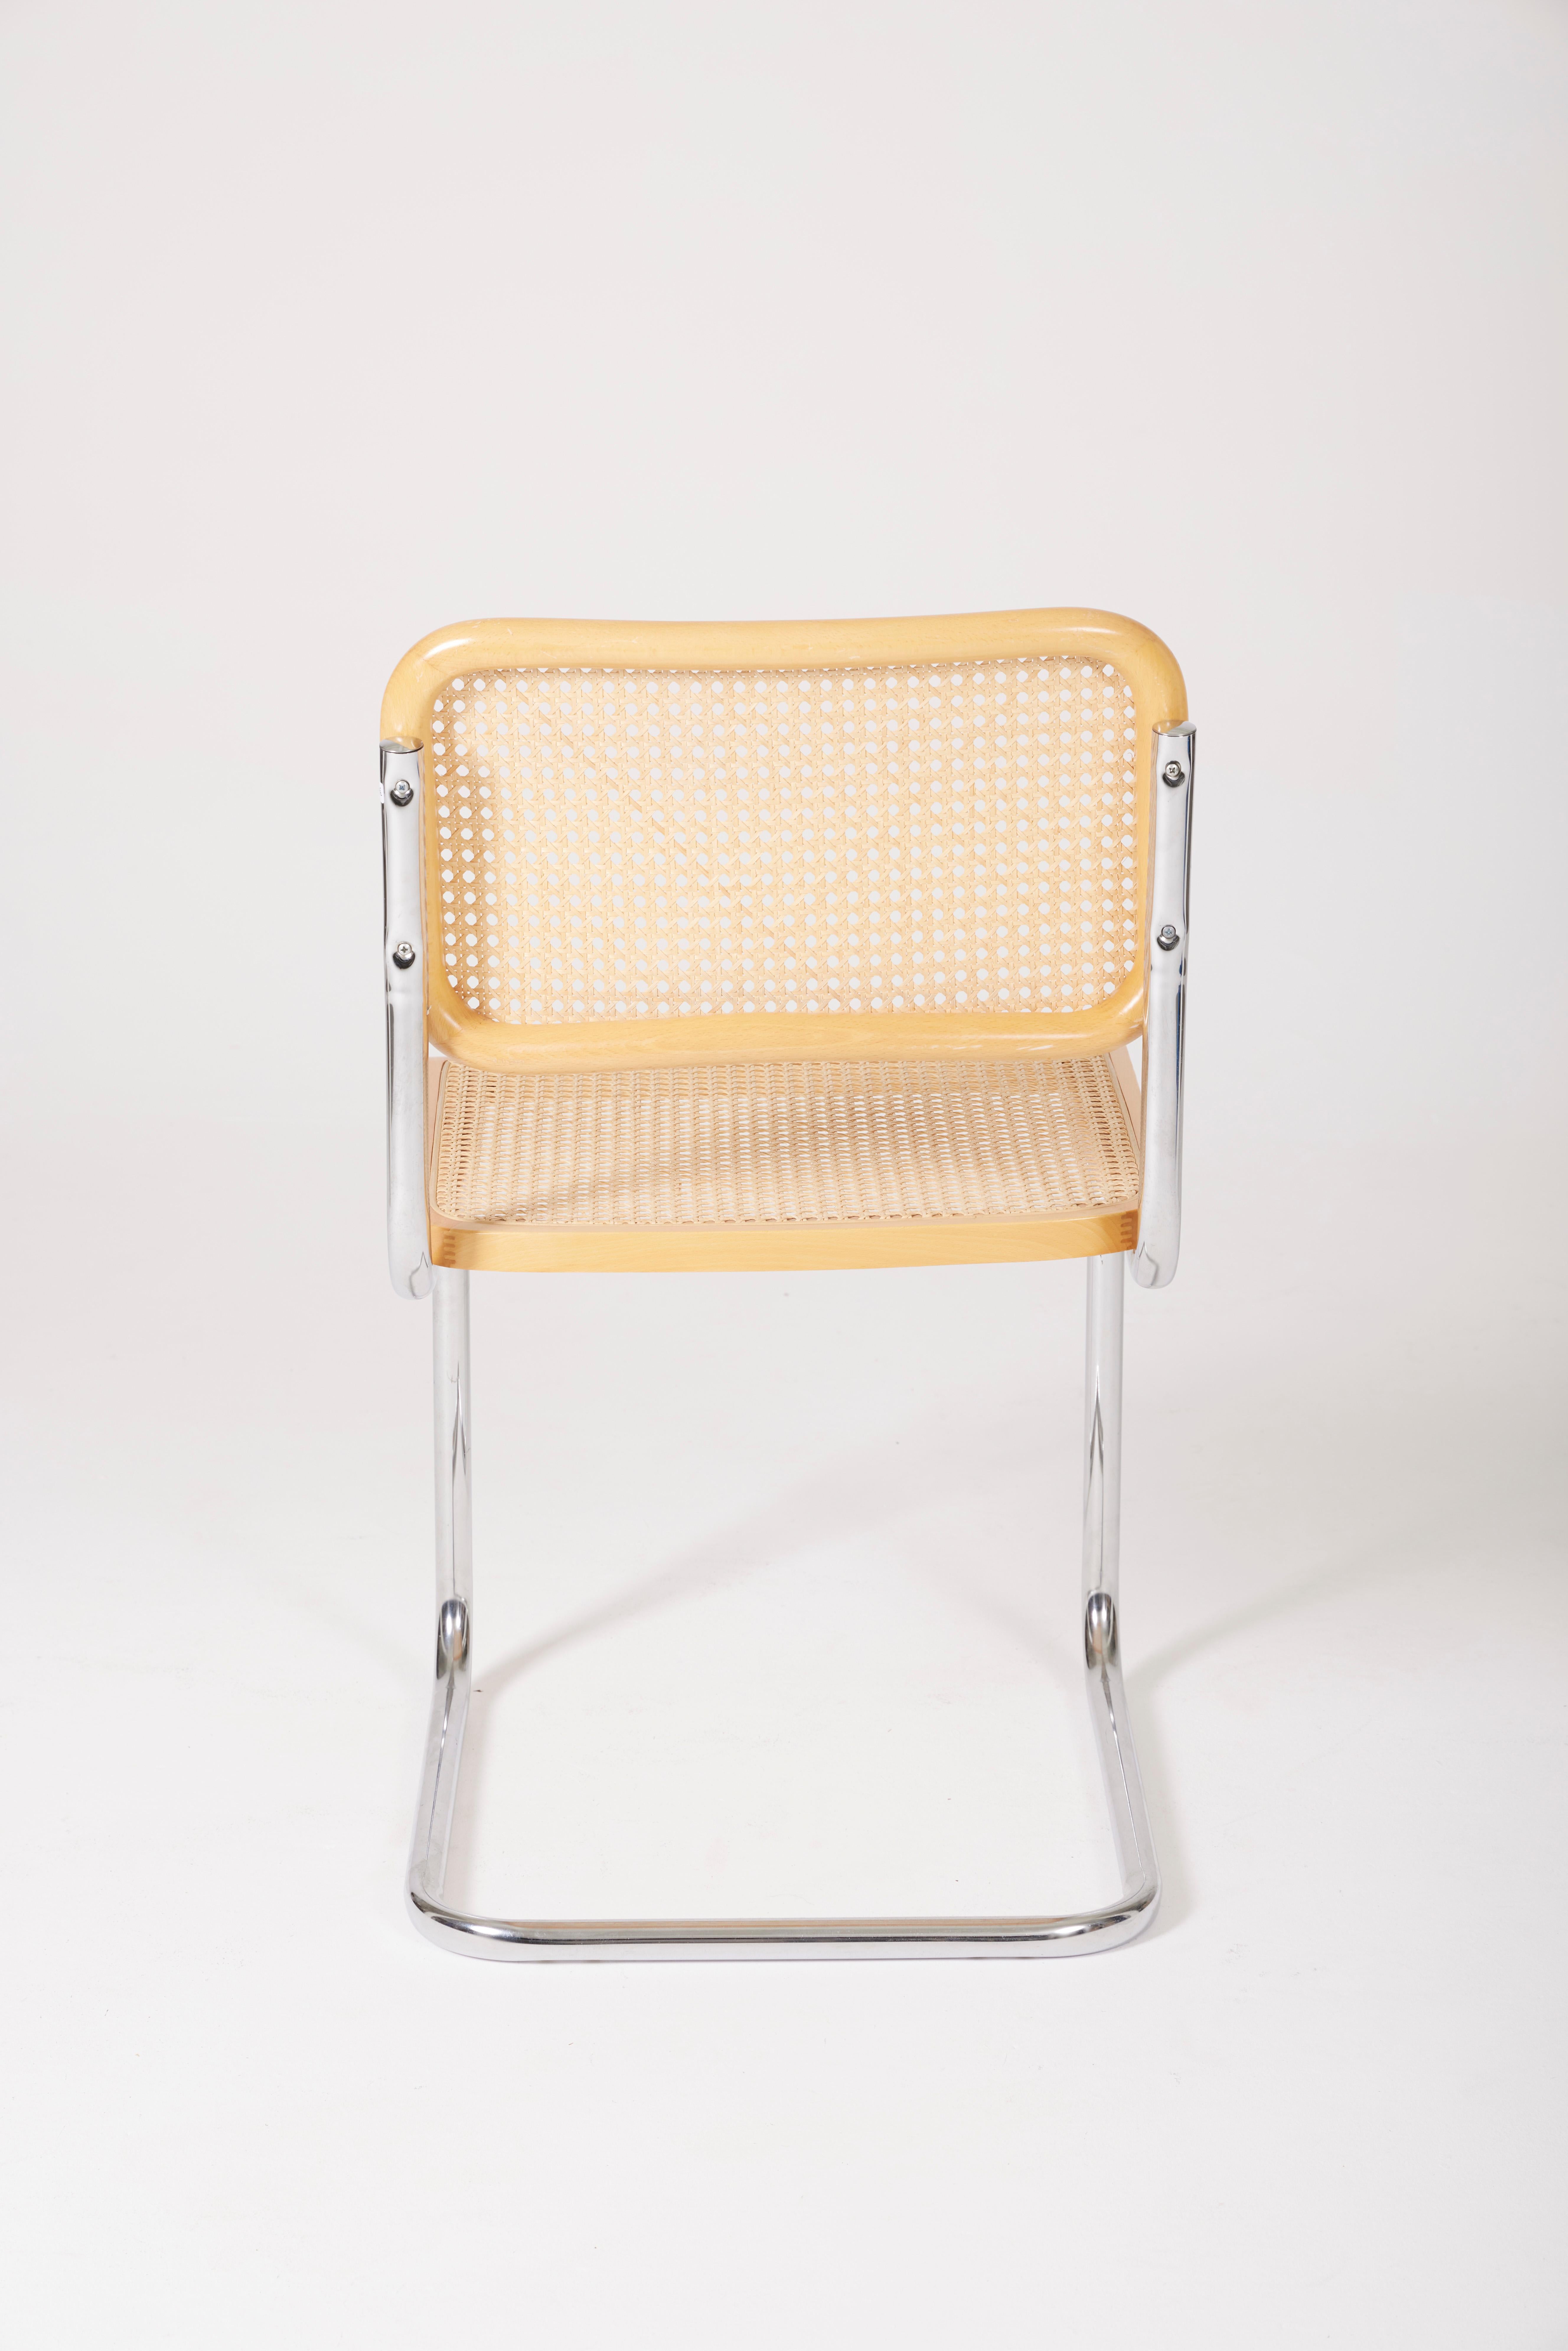 20th Century Chair by Marcel Breuer